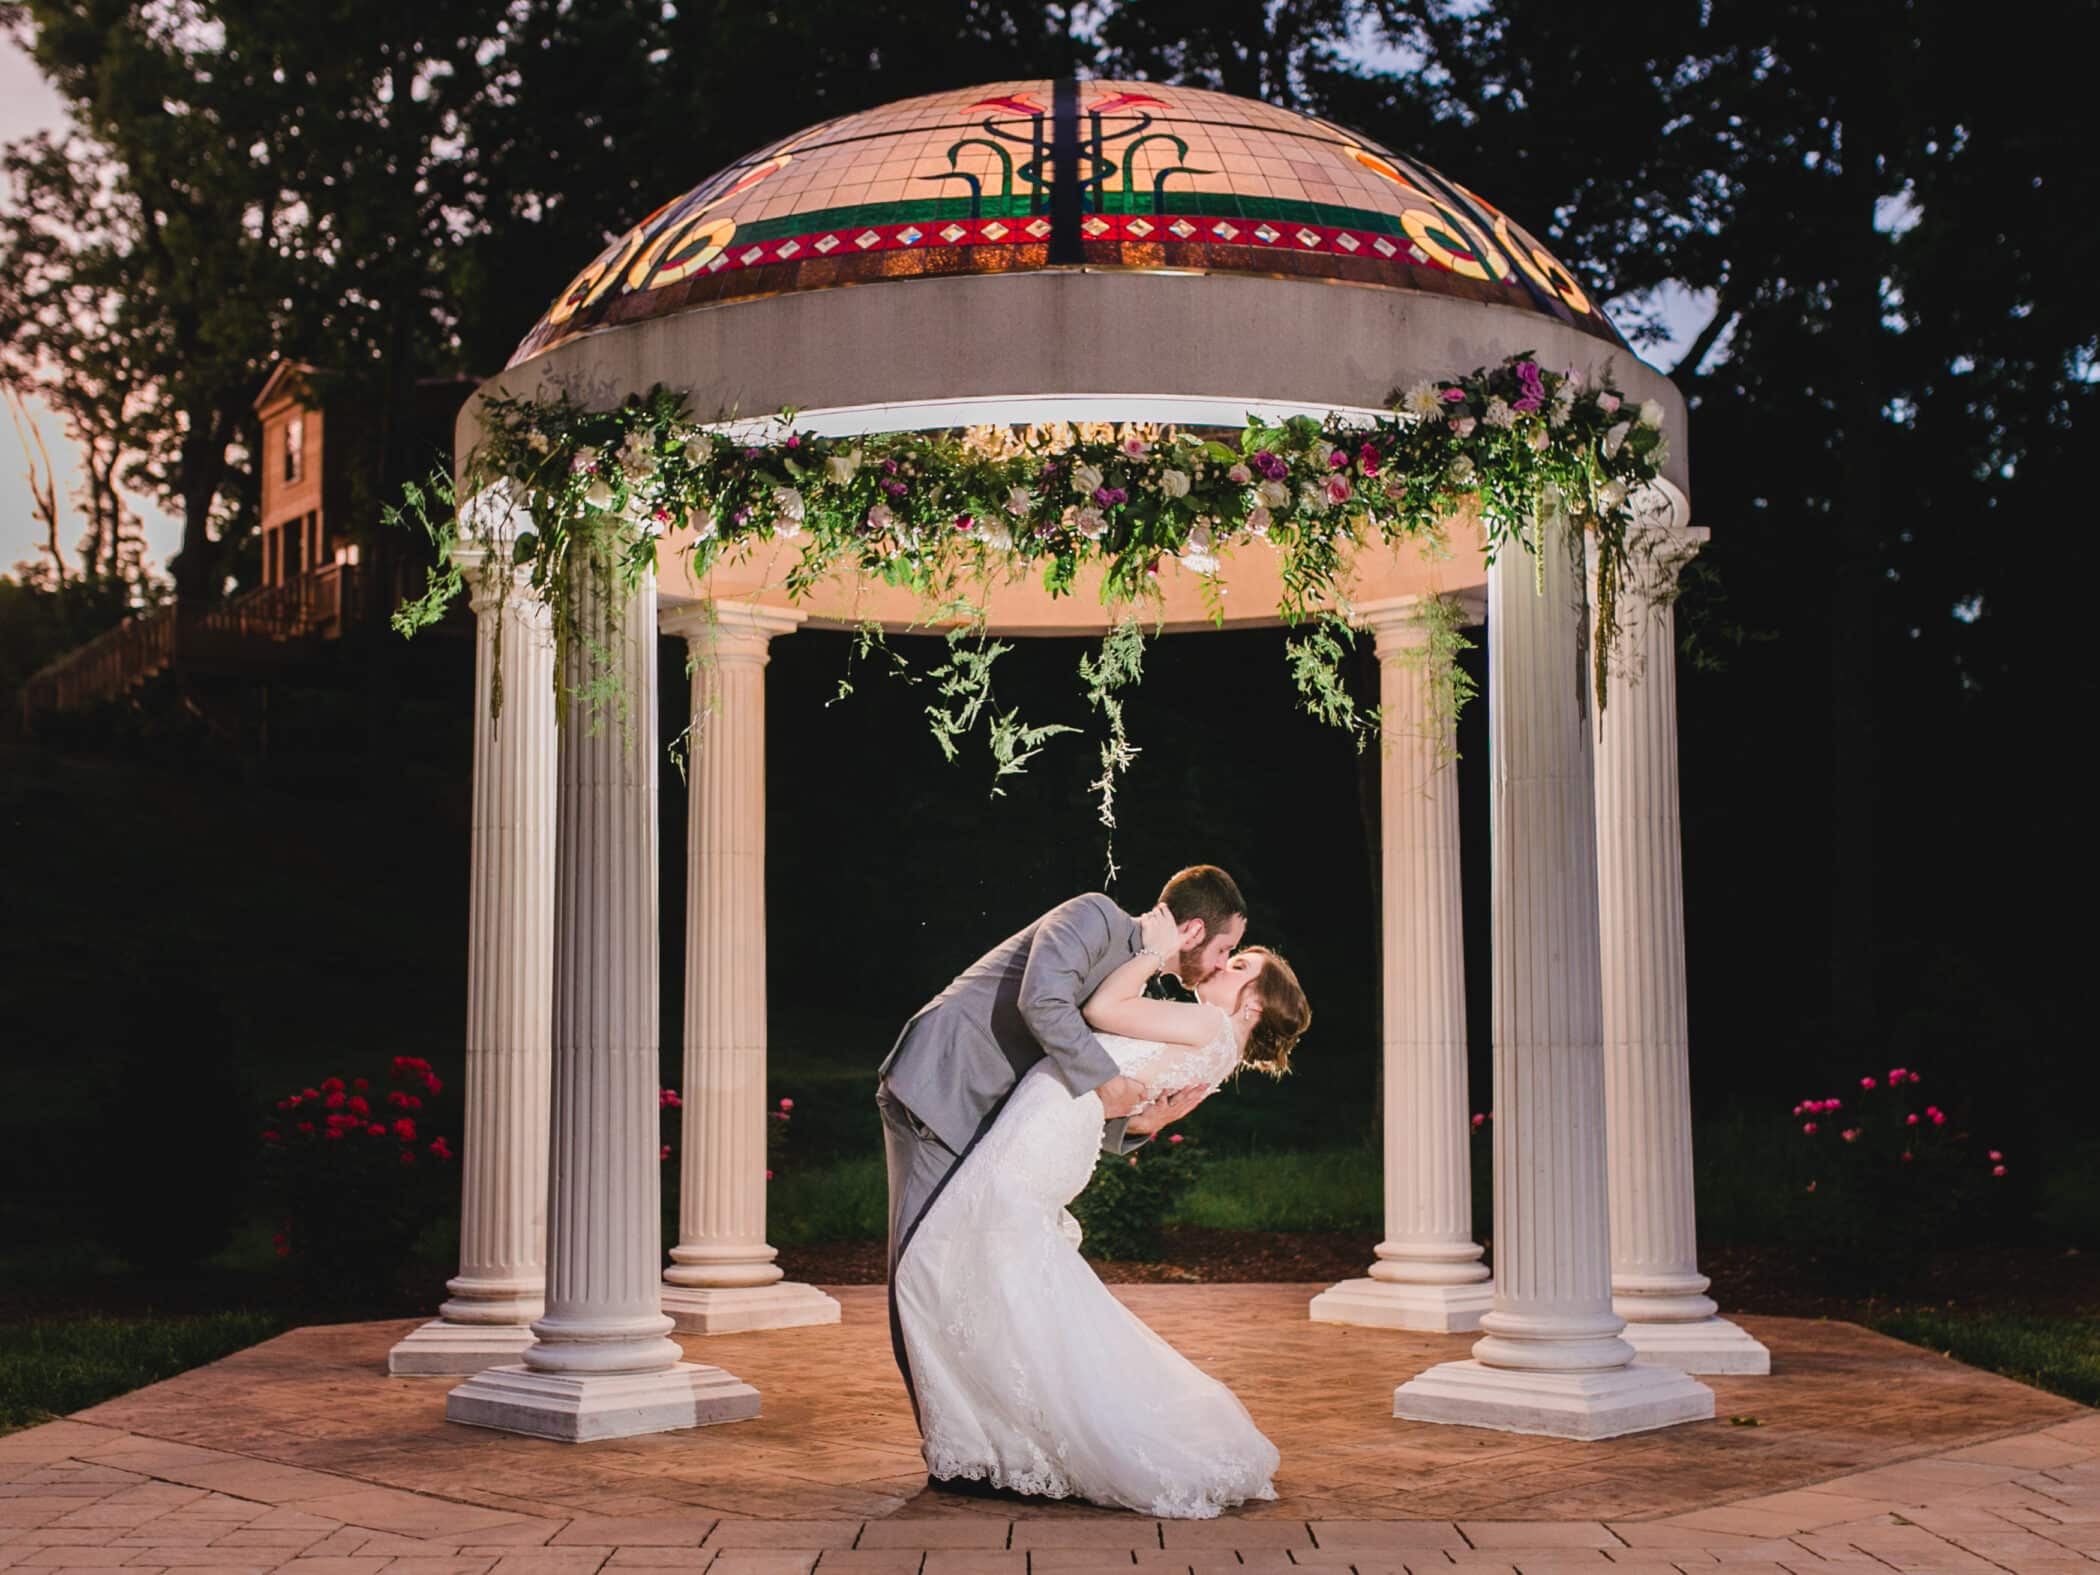 Selecting Your Virginia Wedding Venue | Entwined Events | Venue: Bella Rose Plantation in Lynchburg, VA | Photo Credit: April B Photography